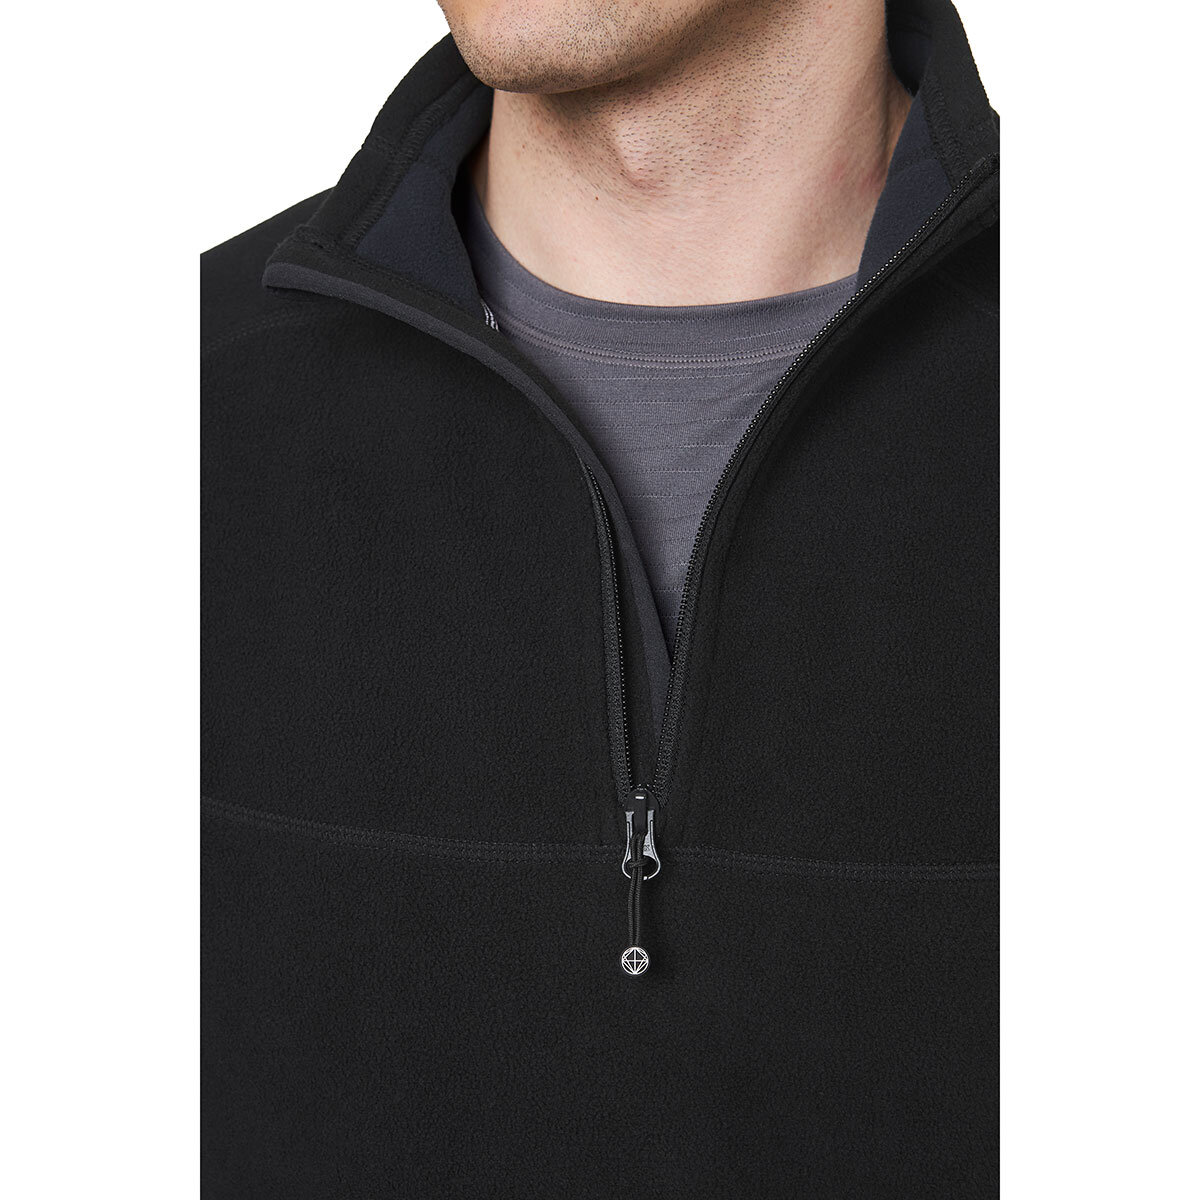 Mondetta Mens Quarter Zip Pullover in Black, Extra Large